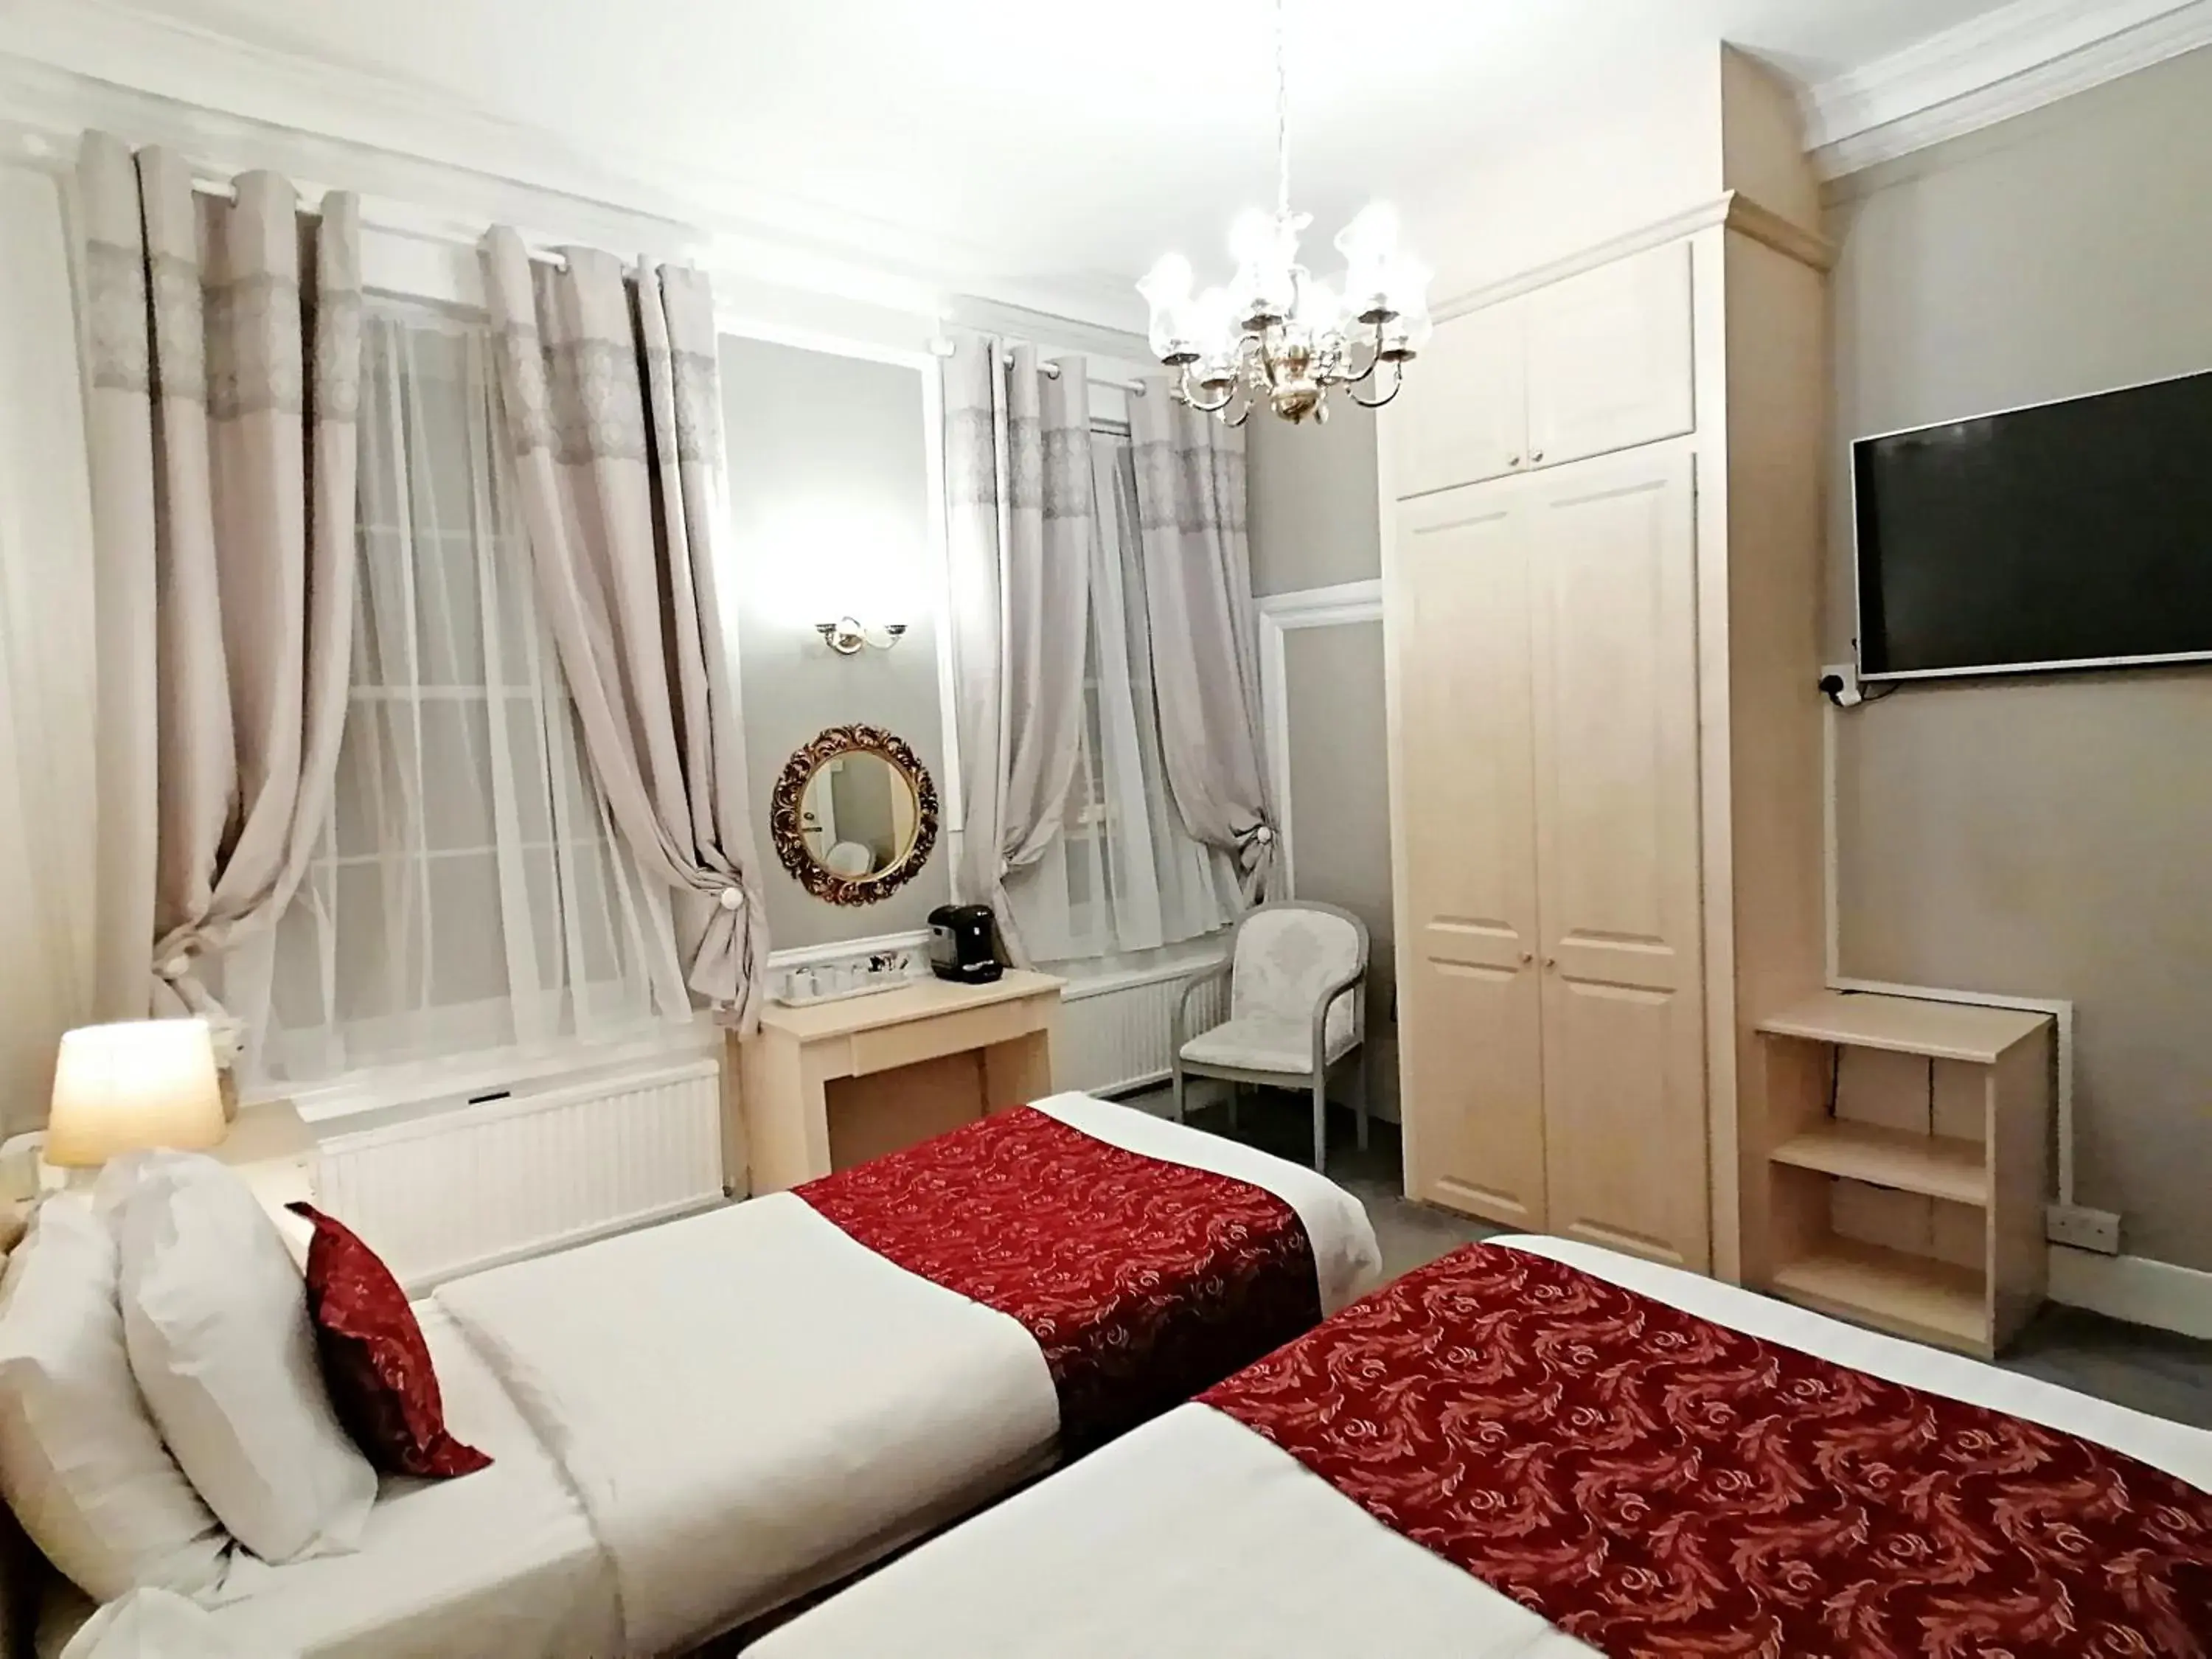 Bedroom, Room Photo in The Gordon House Hotel